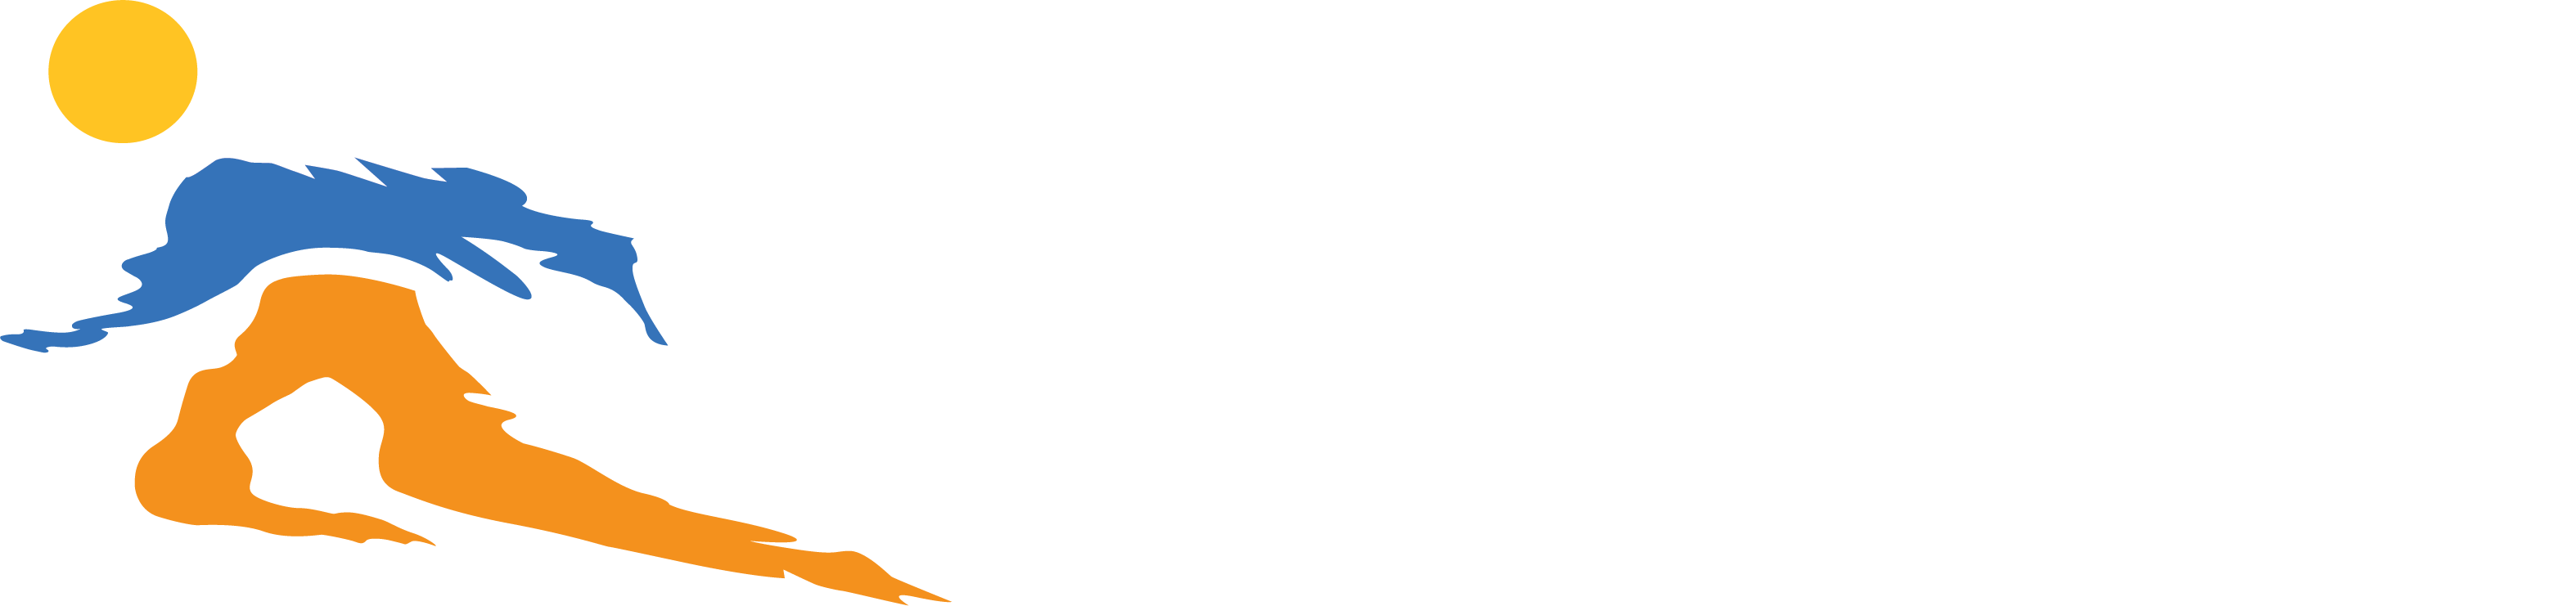 Utah Sports Commission Logo PNG image